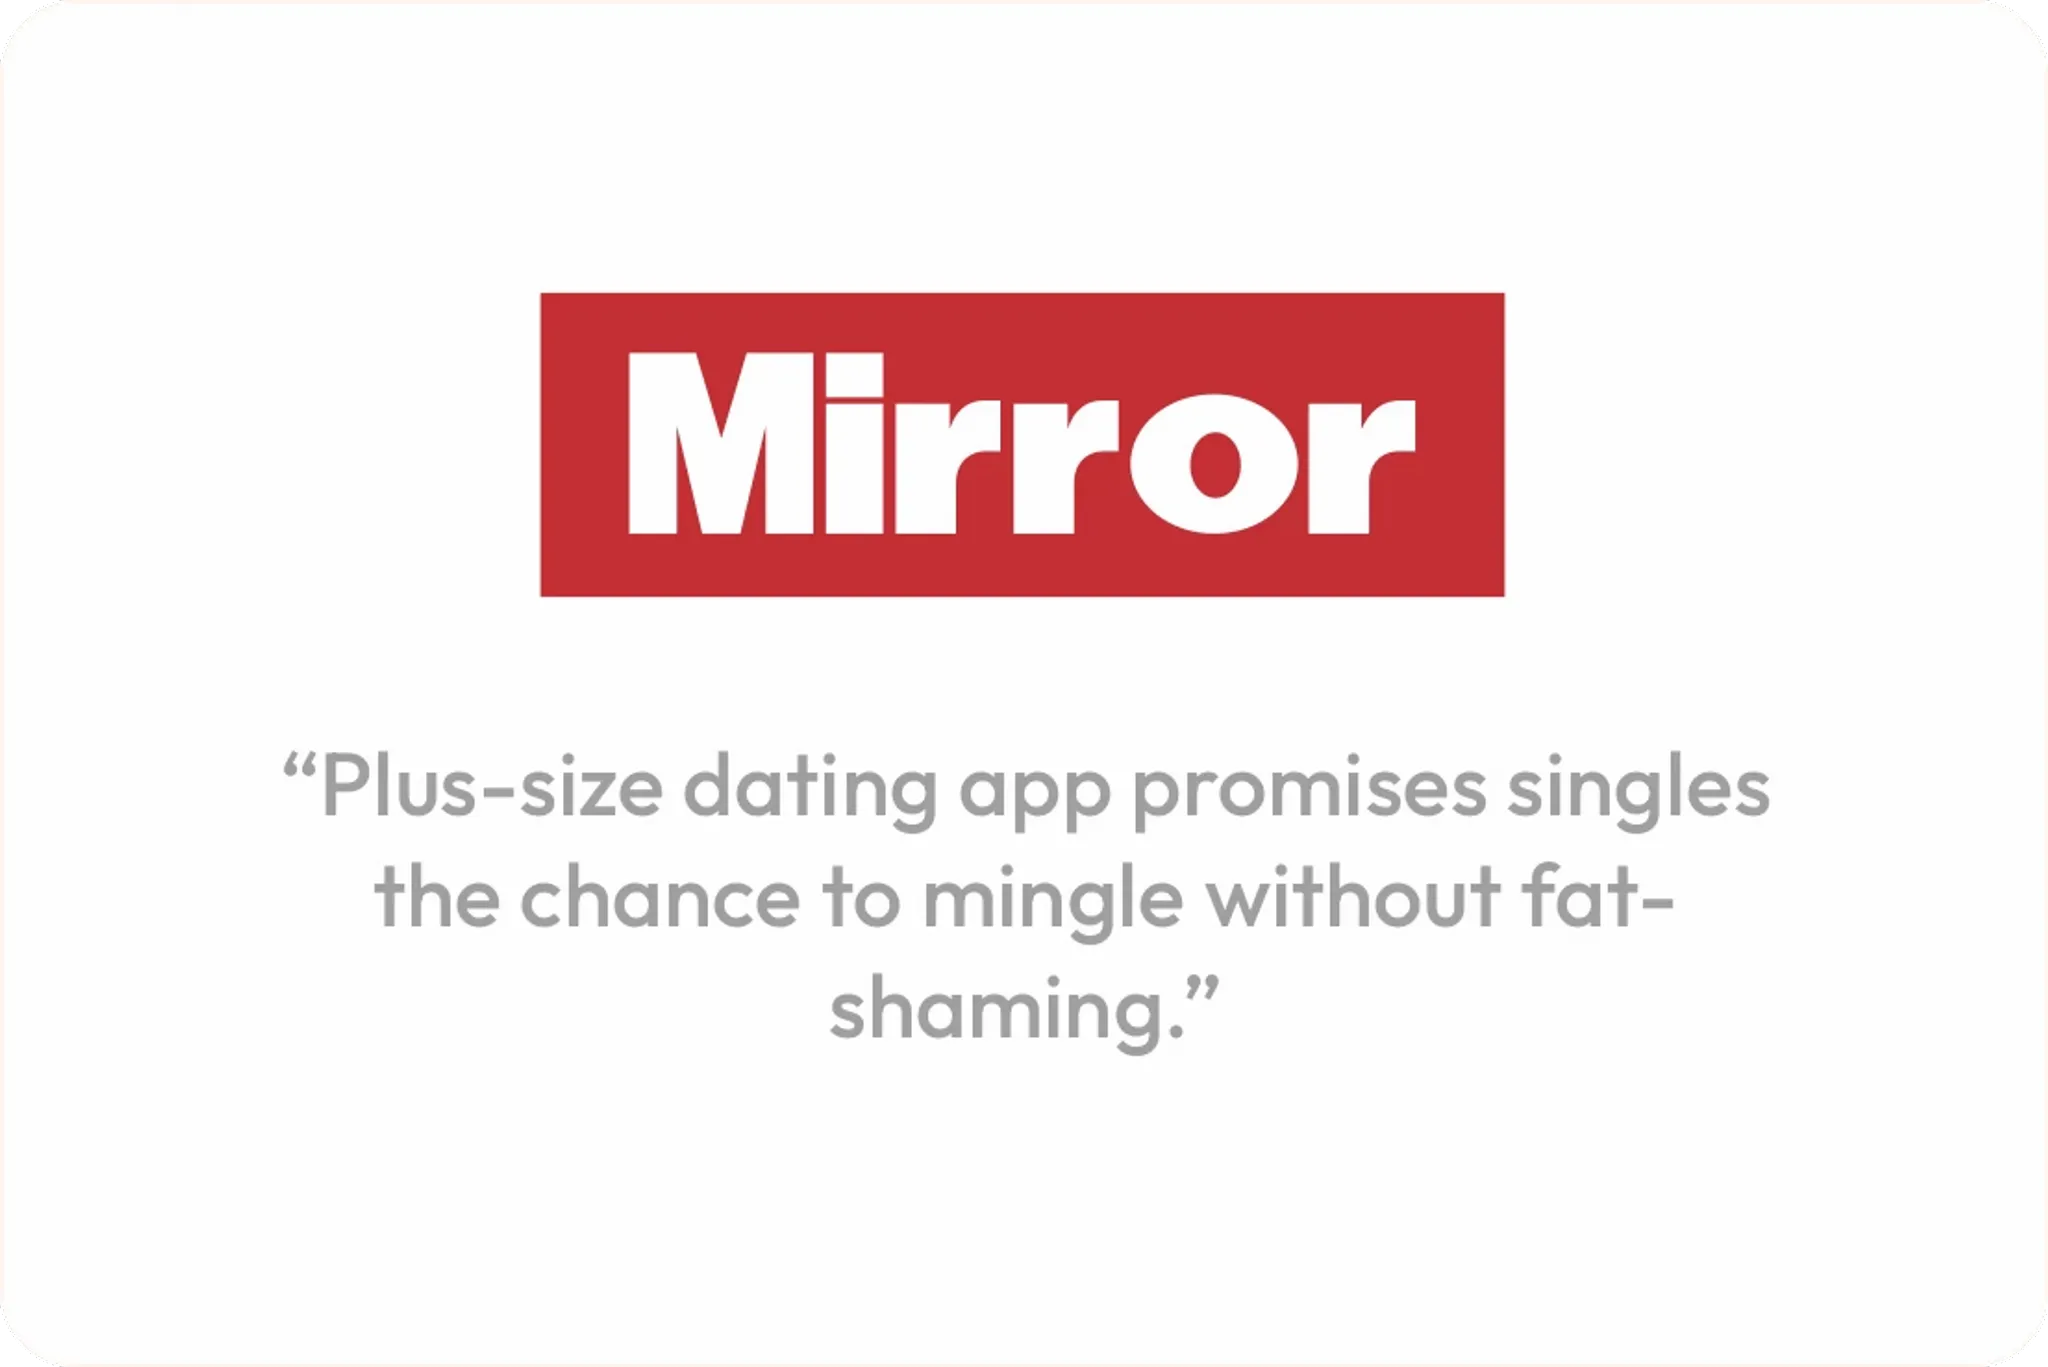 http://www.mirror.co.uk/news/world-news/plus-size-dating-app-promises-7205708